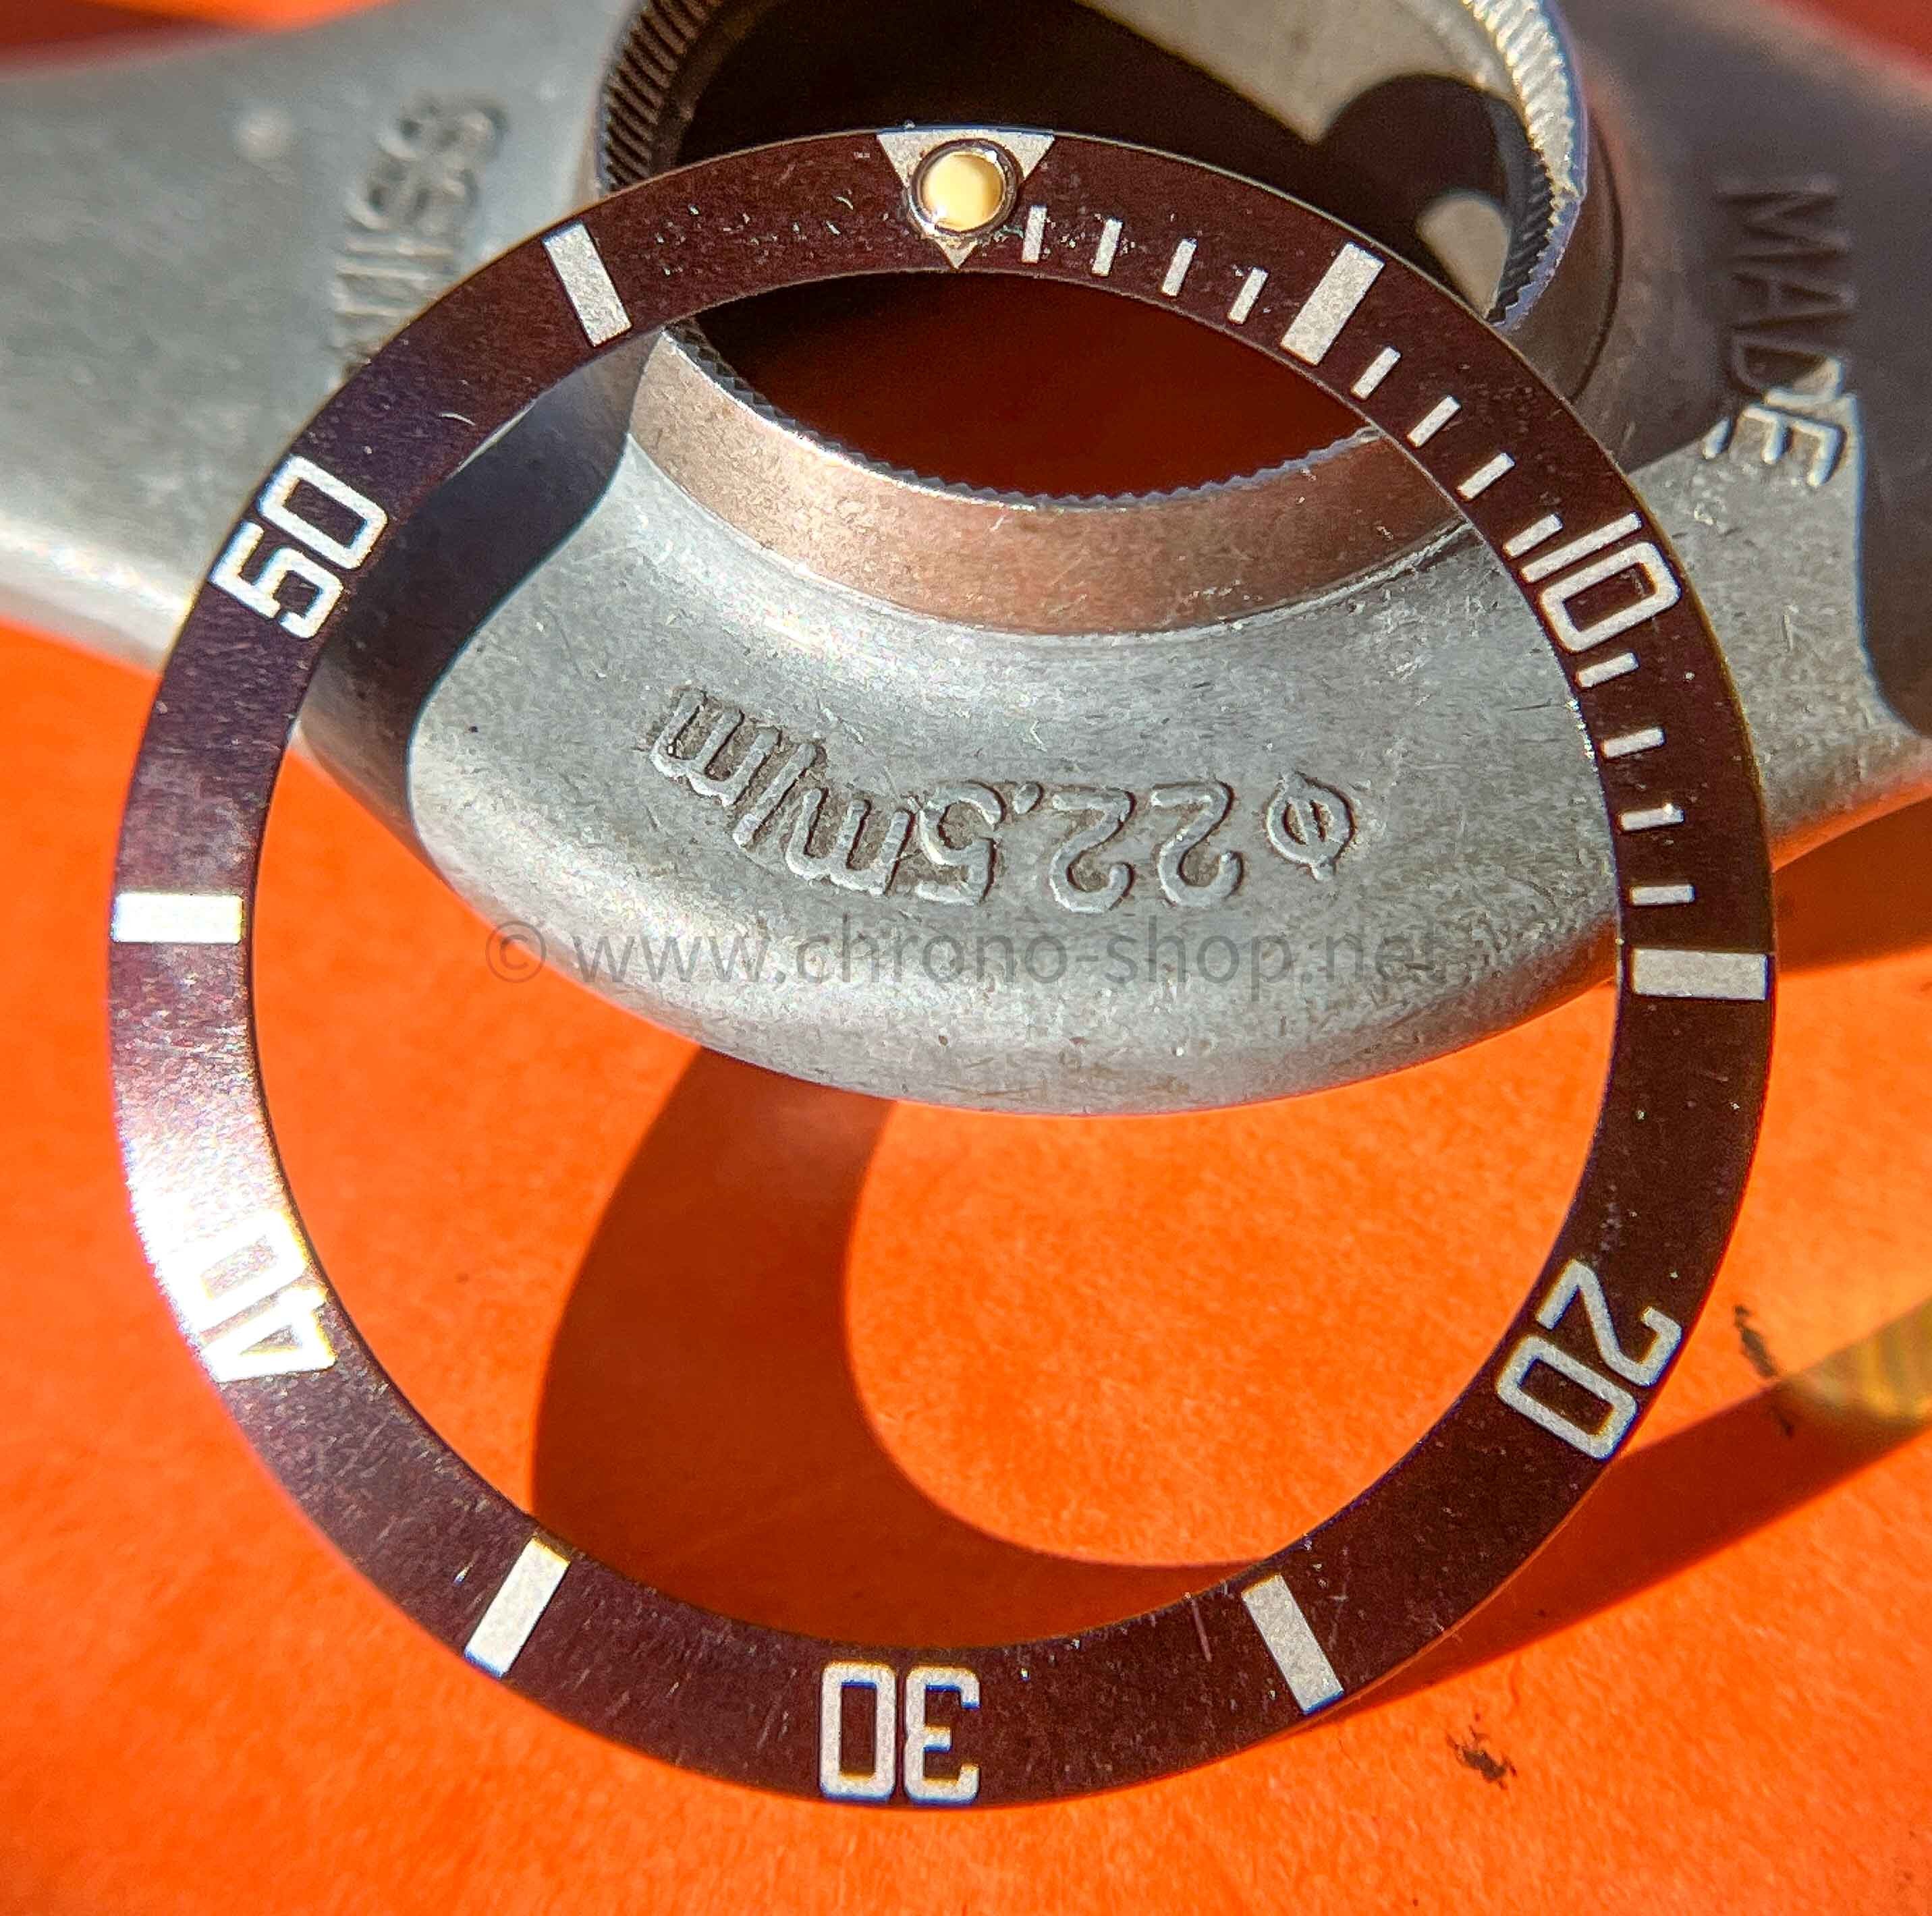 Rolex Tropical Submariner date watches 16800,168000,16610,16613,16618,16808 Bronze Bezel Insert Inlay Tritium dot